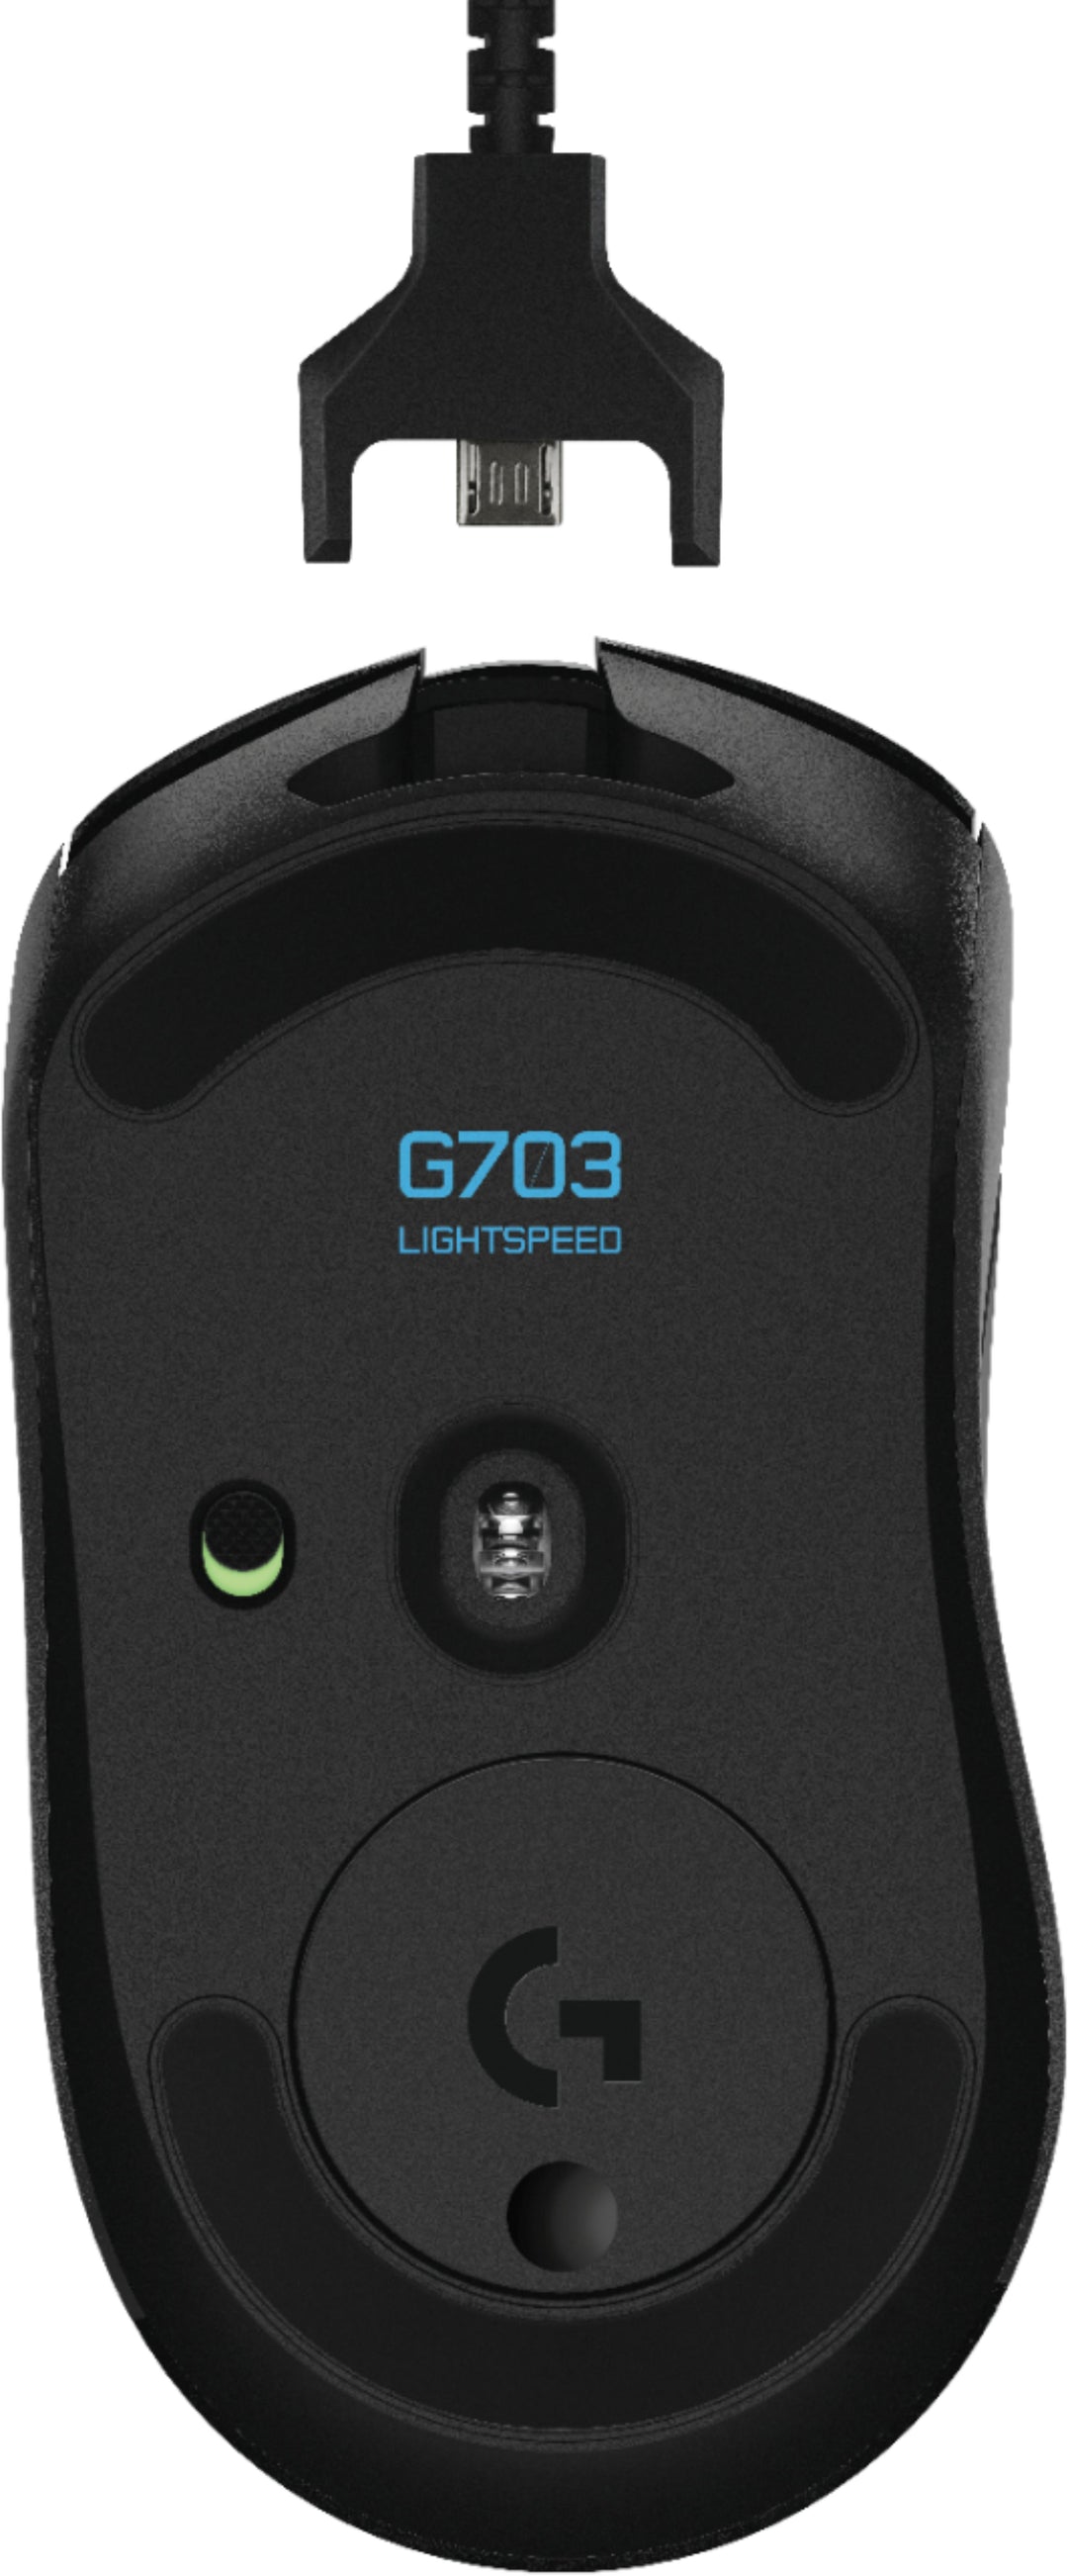 Logitech - G703 LIGHTSPEED Wireless Optical Gaming Mouse - Black_8